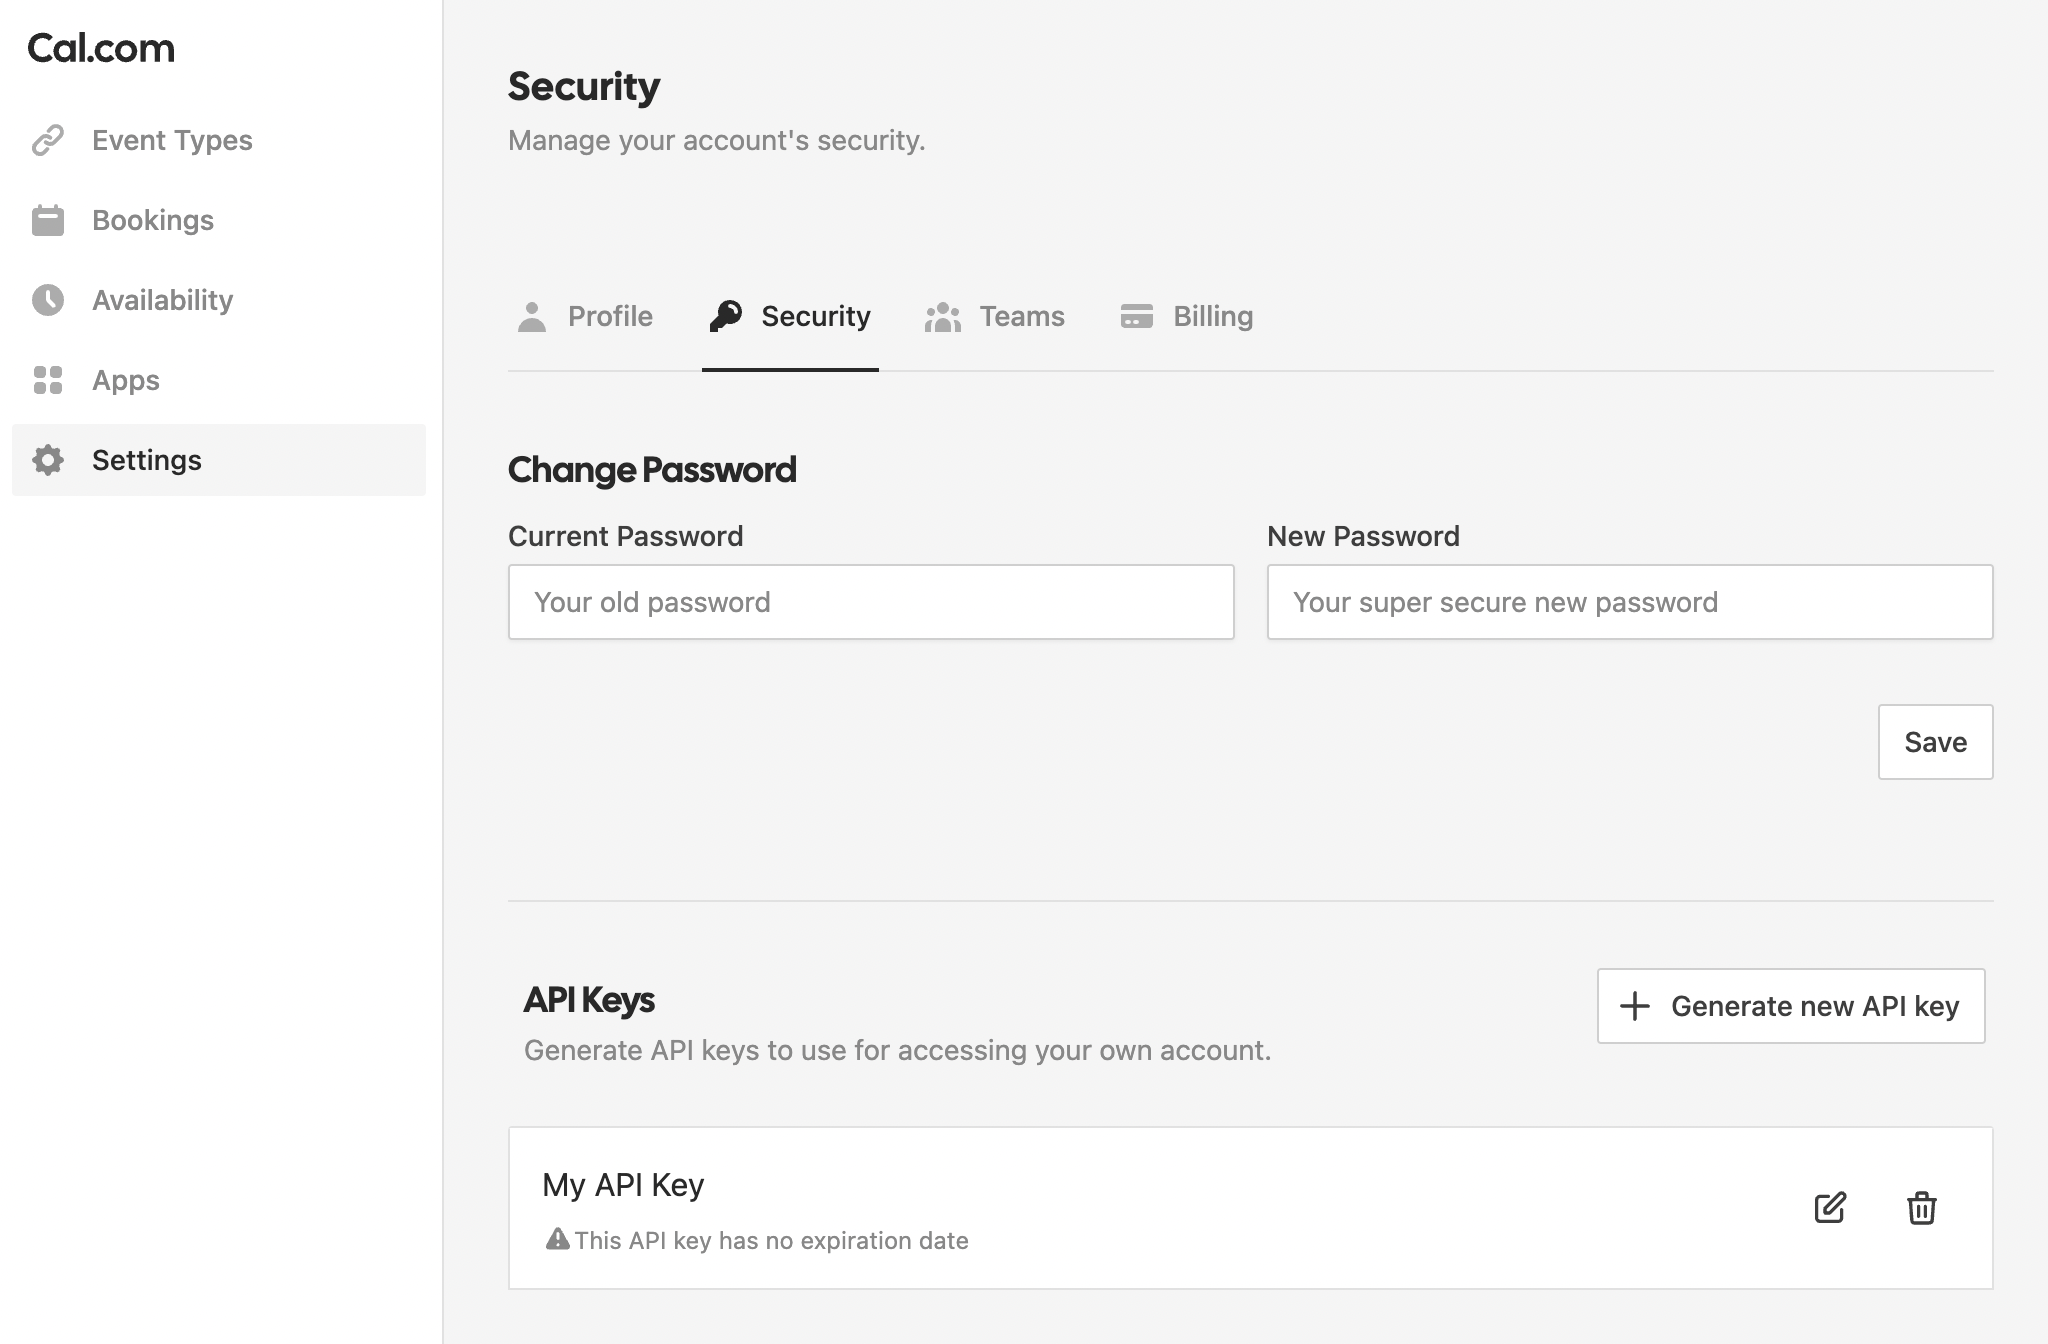 API Keys are under Settings > Security